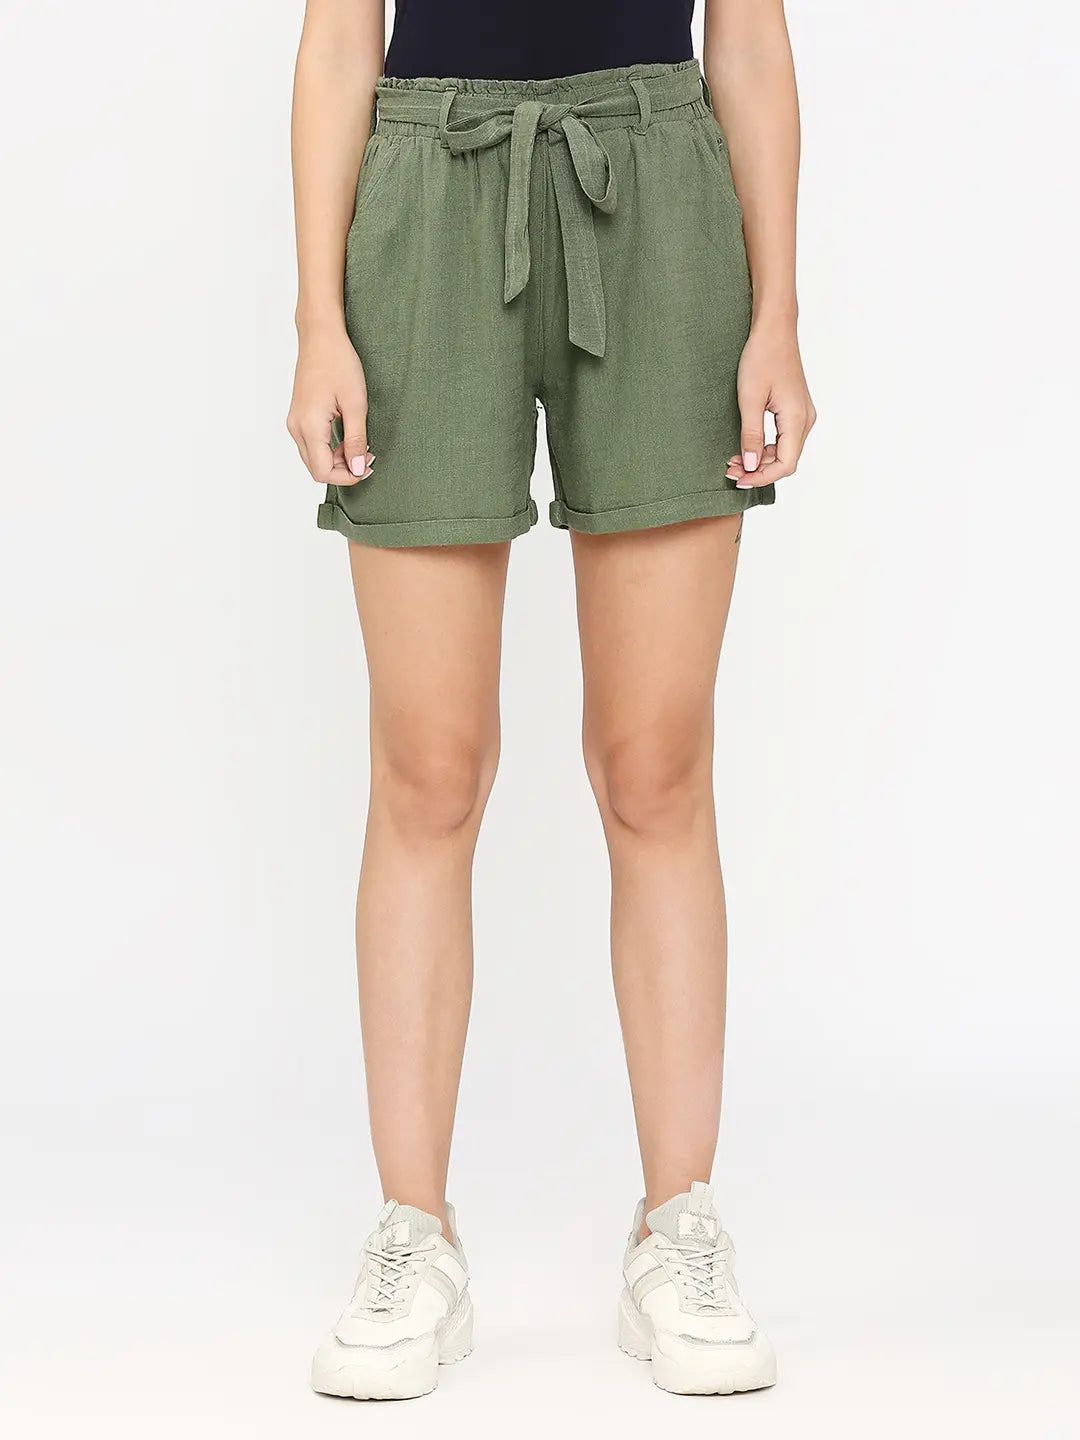 Plus Size Cotton Shorts For Women - Plain Bermuda - Pink at Rs 650.00 |  Ladies Cotton Shorts | ID: 2852246701212